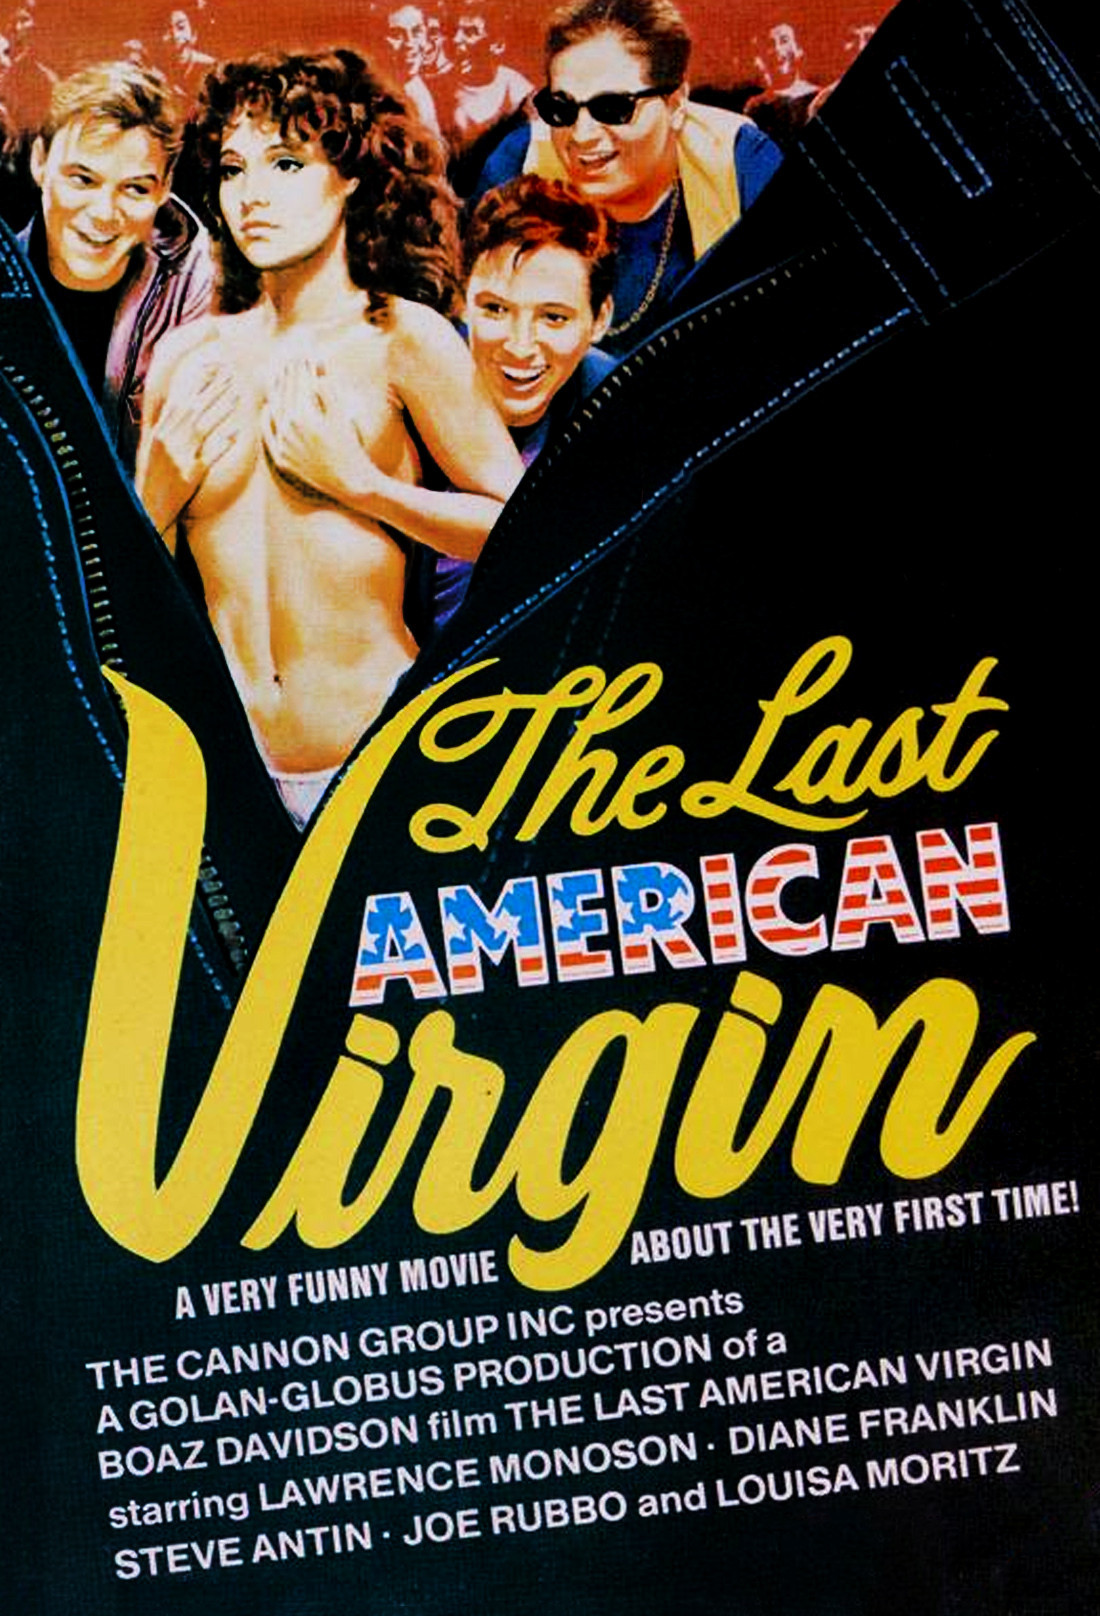 The Last American Virgin